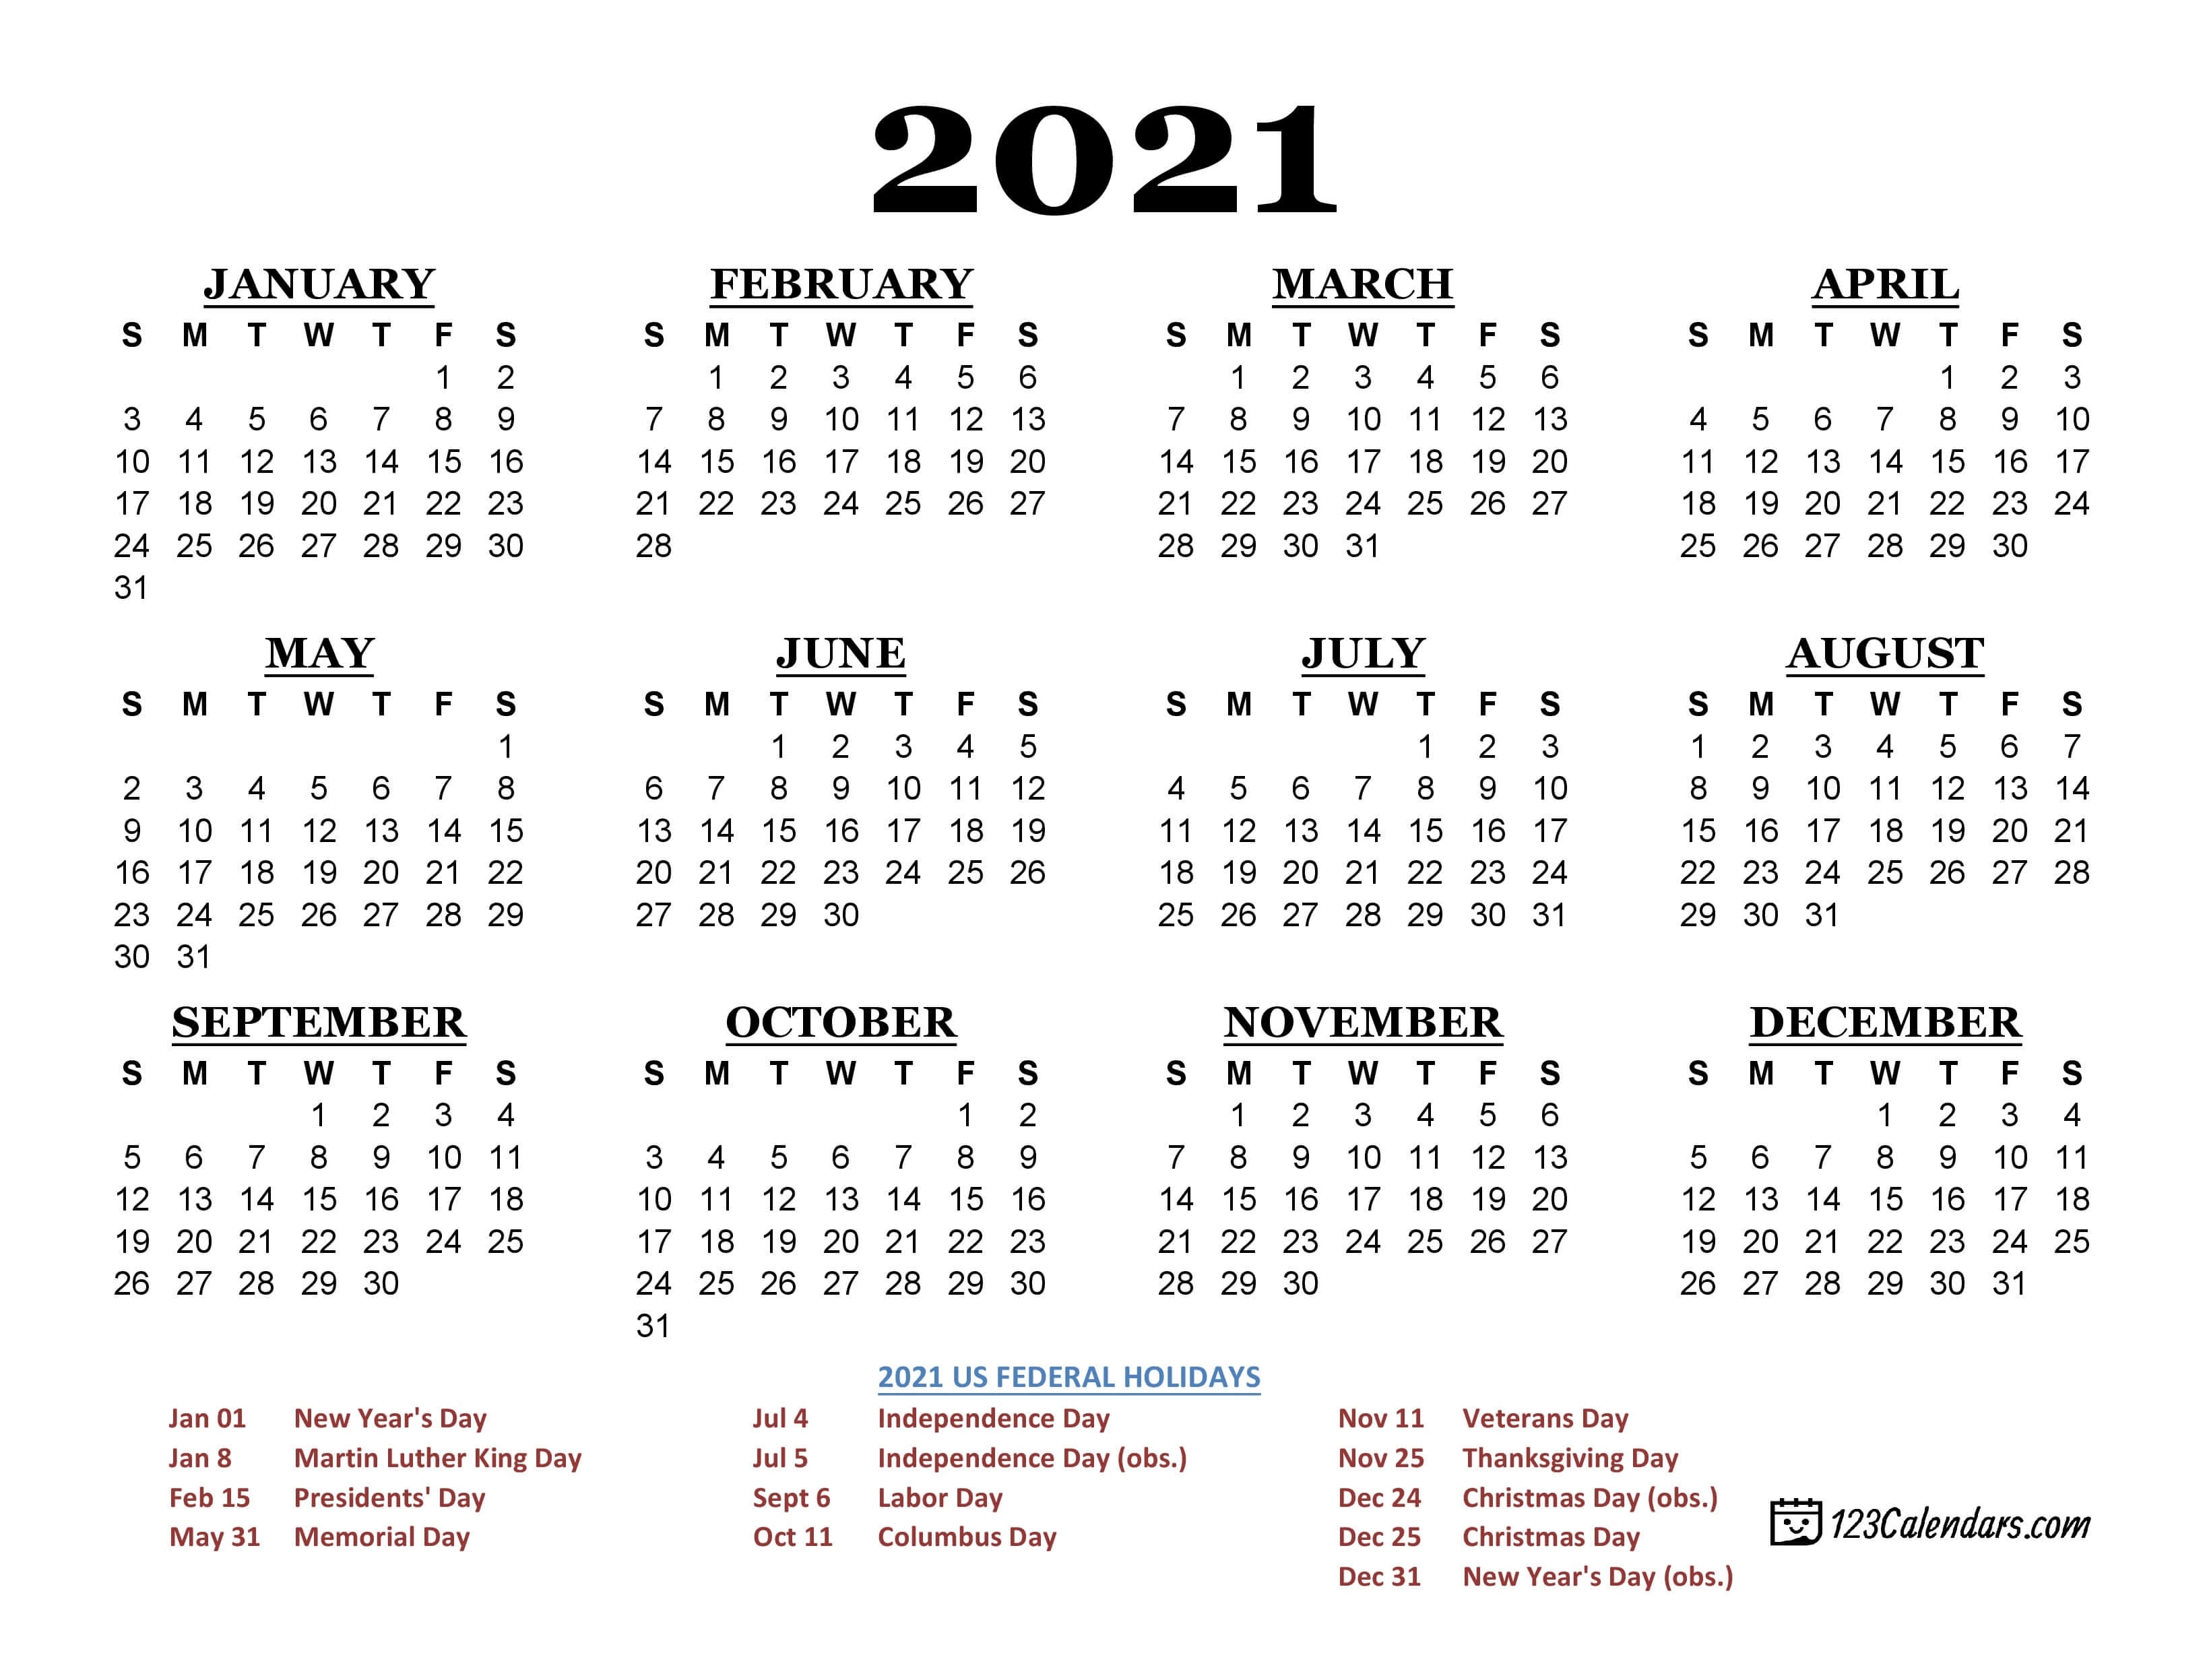 2021 Printable Calendar | 123Calendars Calendar 2021 With Holidays